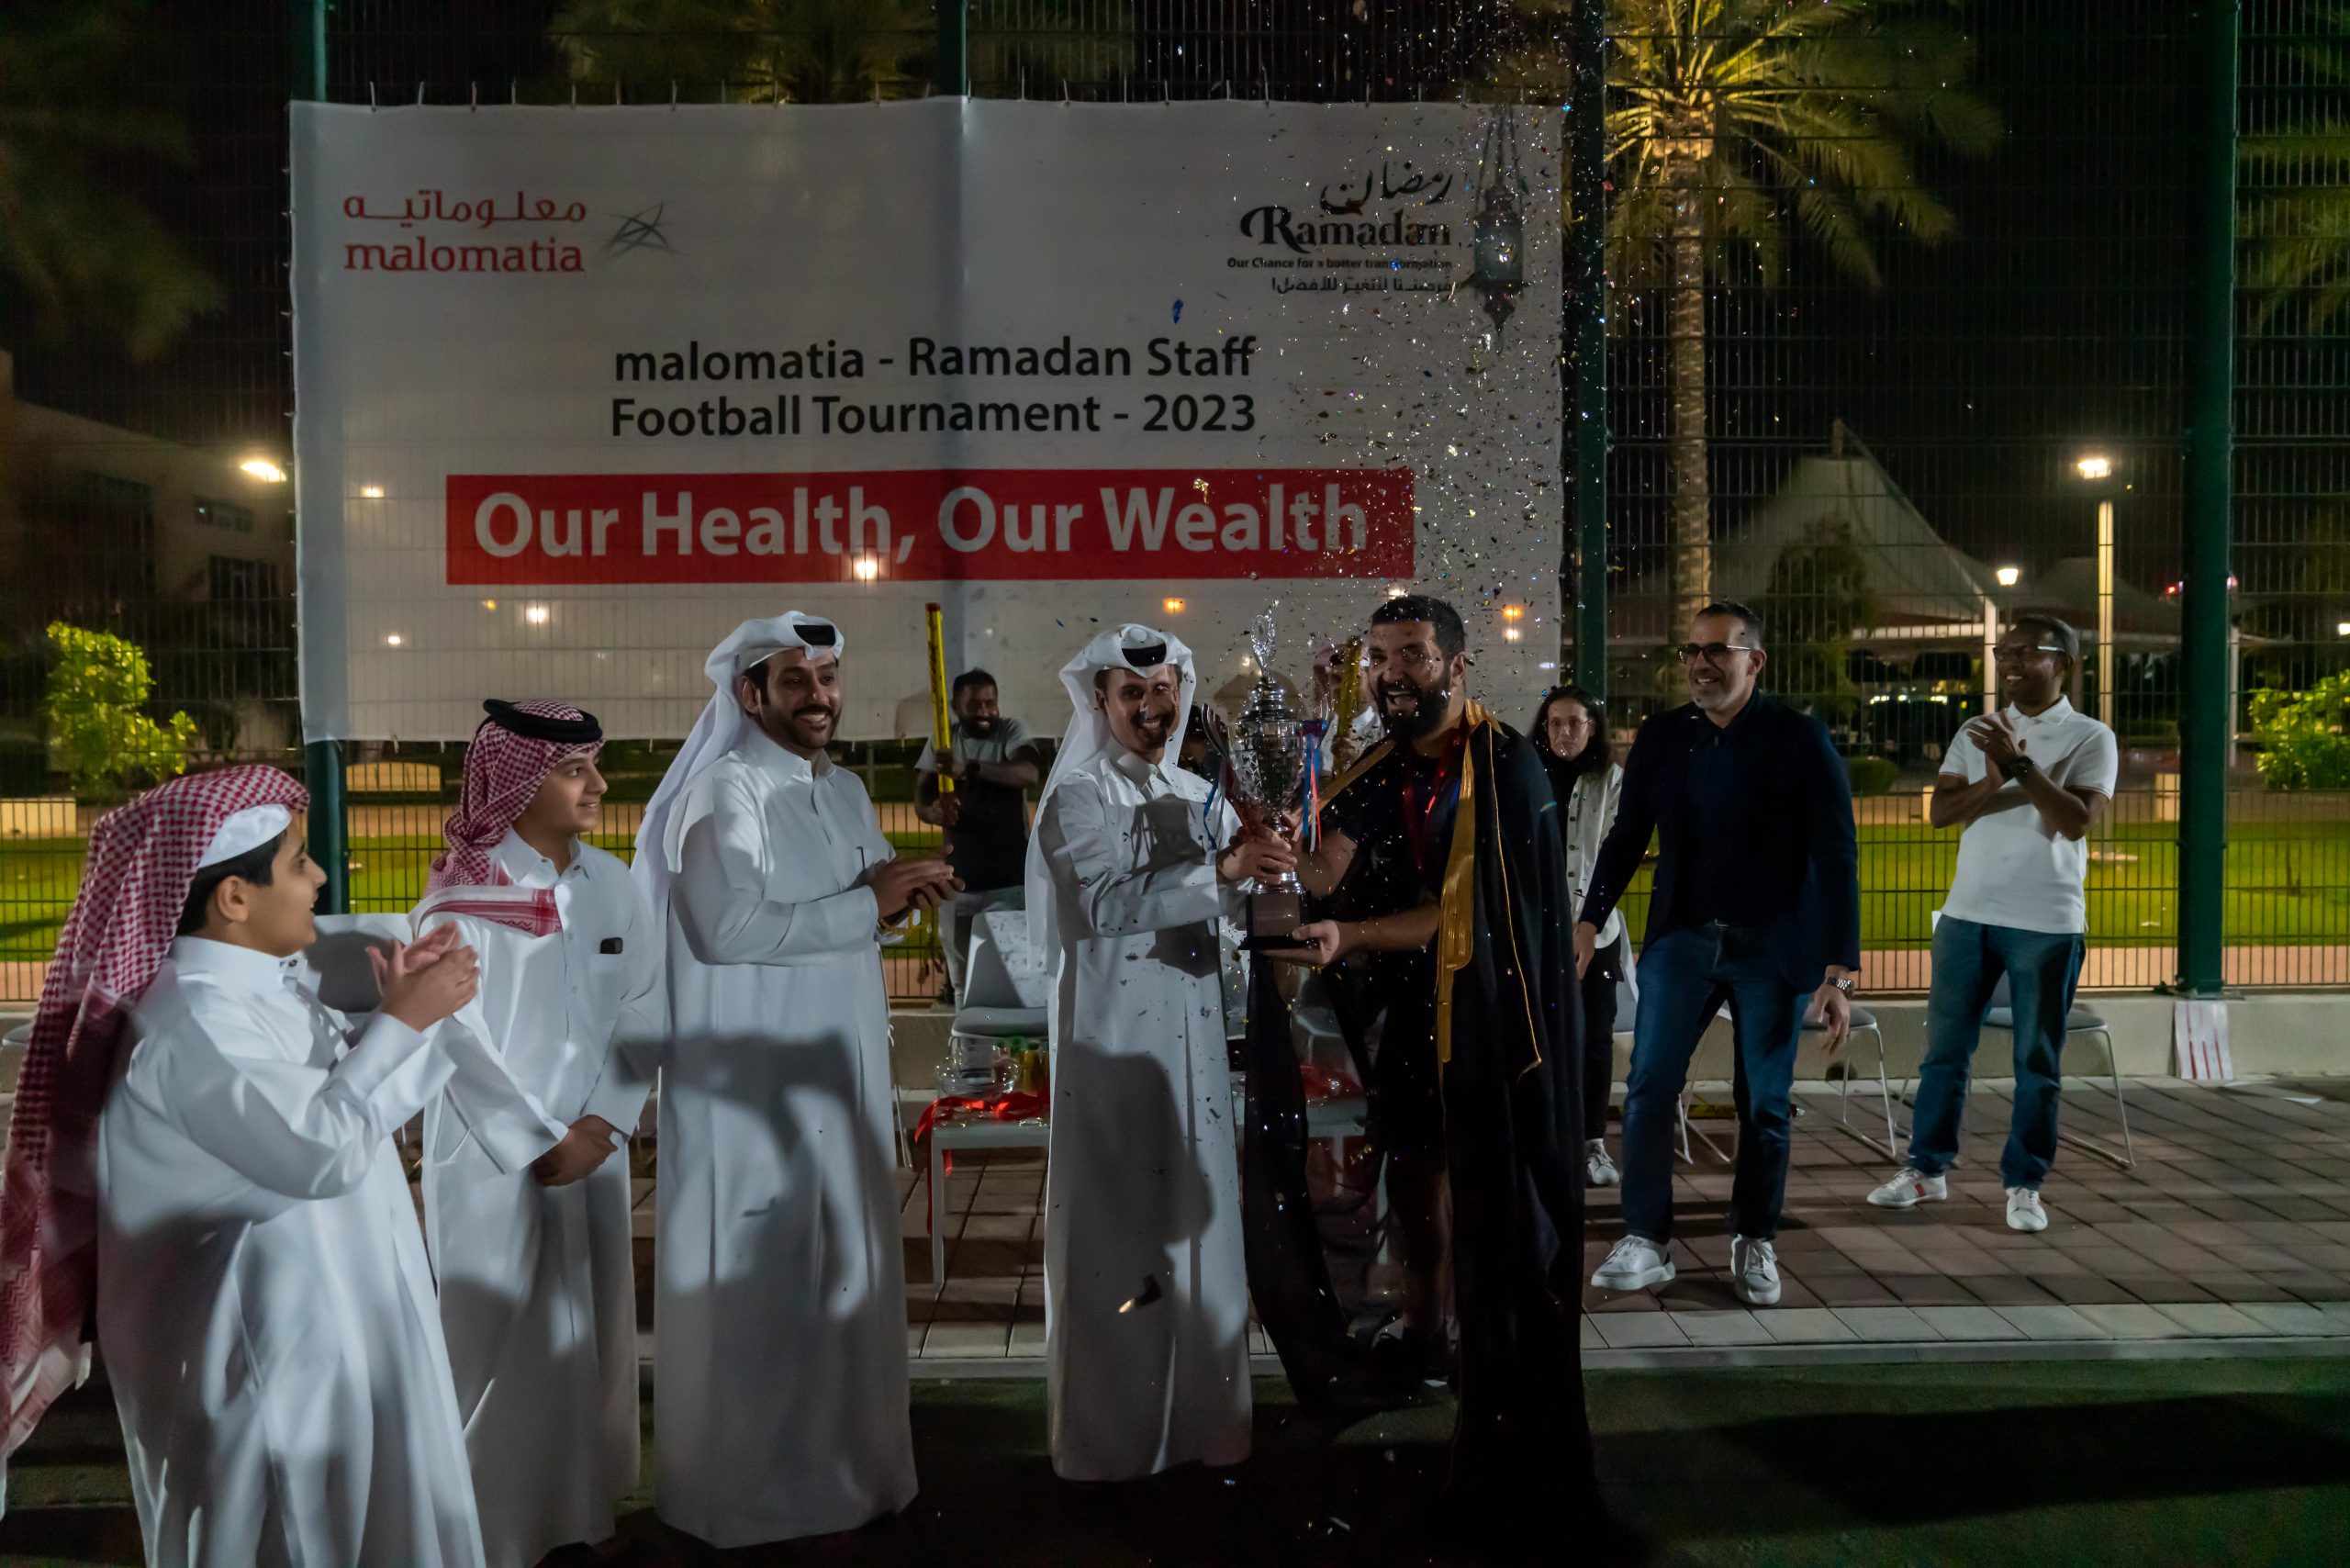 malomatia brings the curtain down on its Ramadan Football Tournament